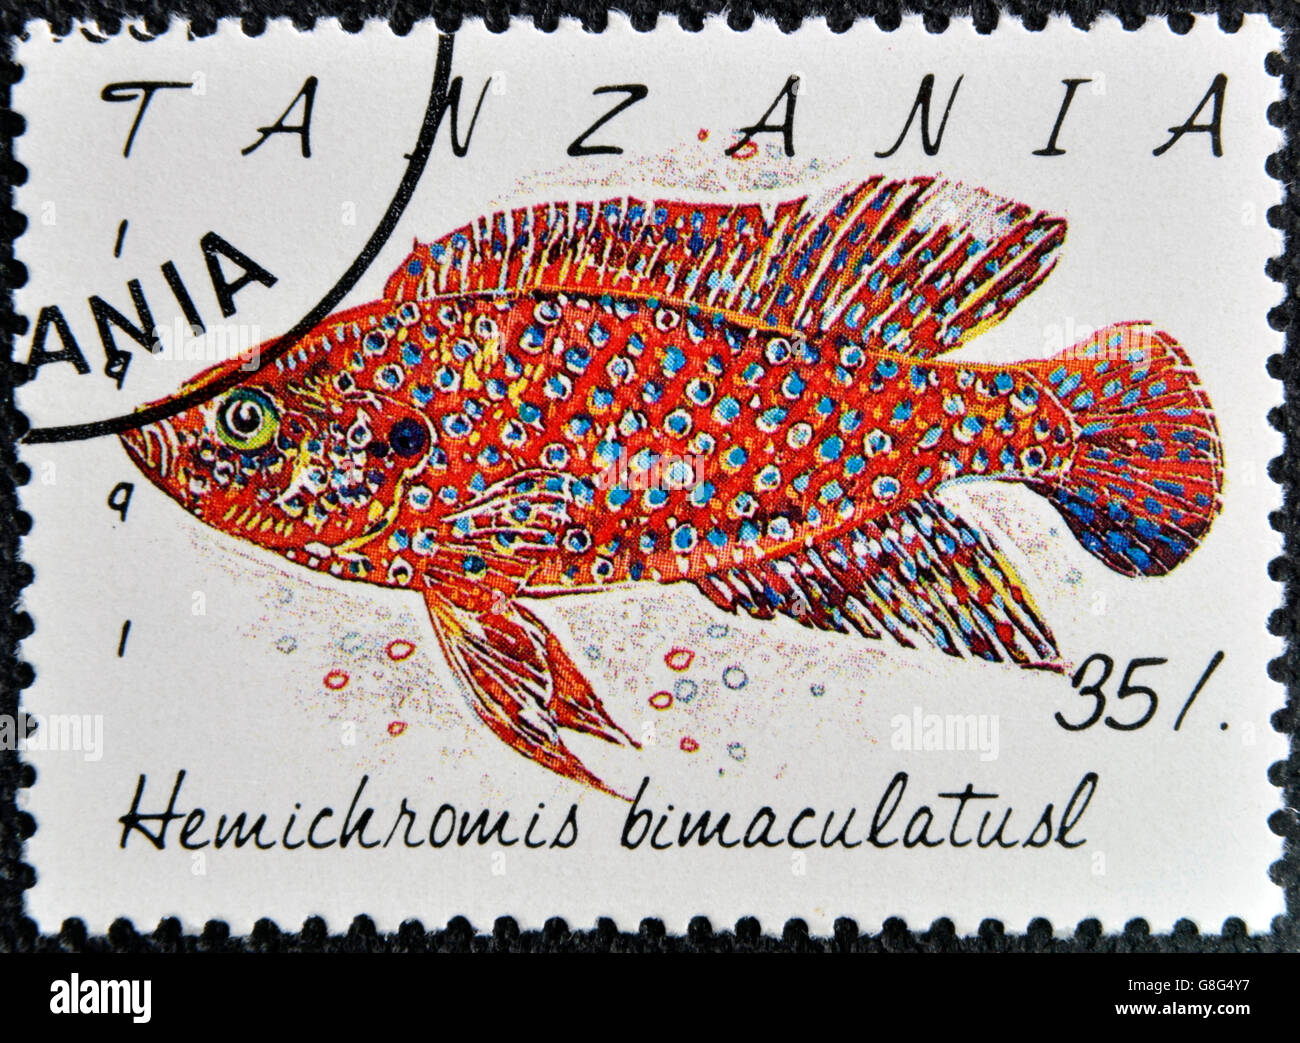 TANZANIA - CIRCA 1991: A stamp printed in Tanzania shows Hemichromis bimaculatusl, circa 1991 Stock Photo